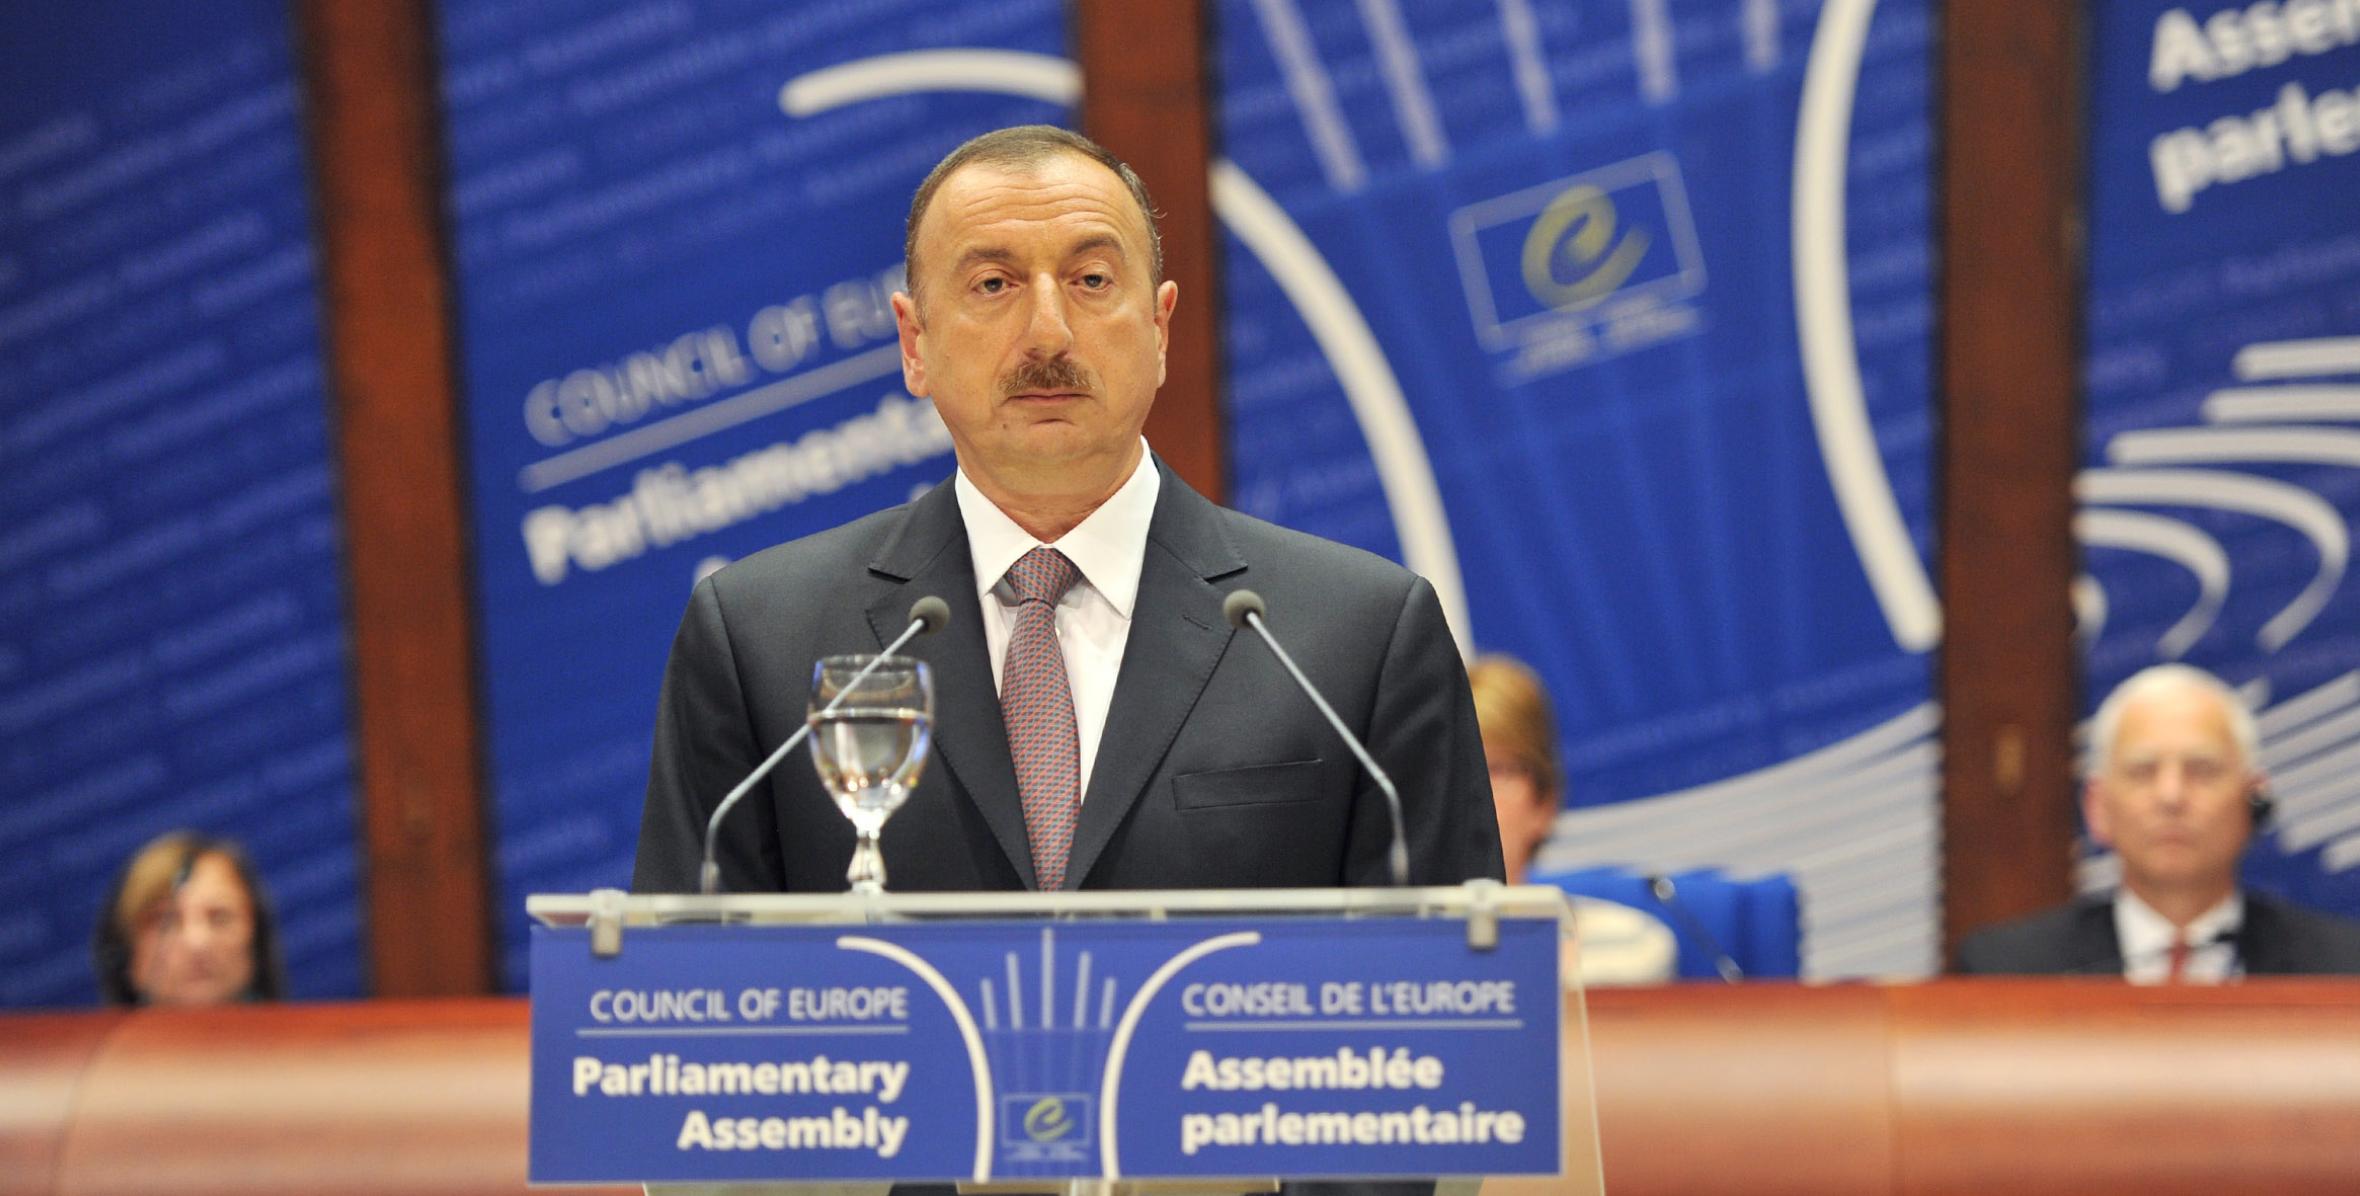 Working visit of Ilham Aliyev to France